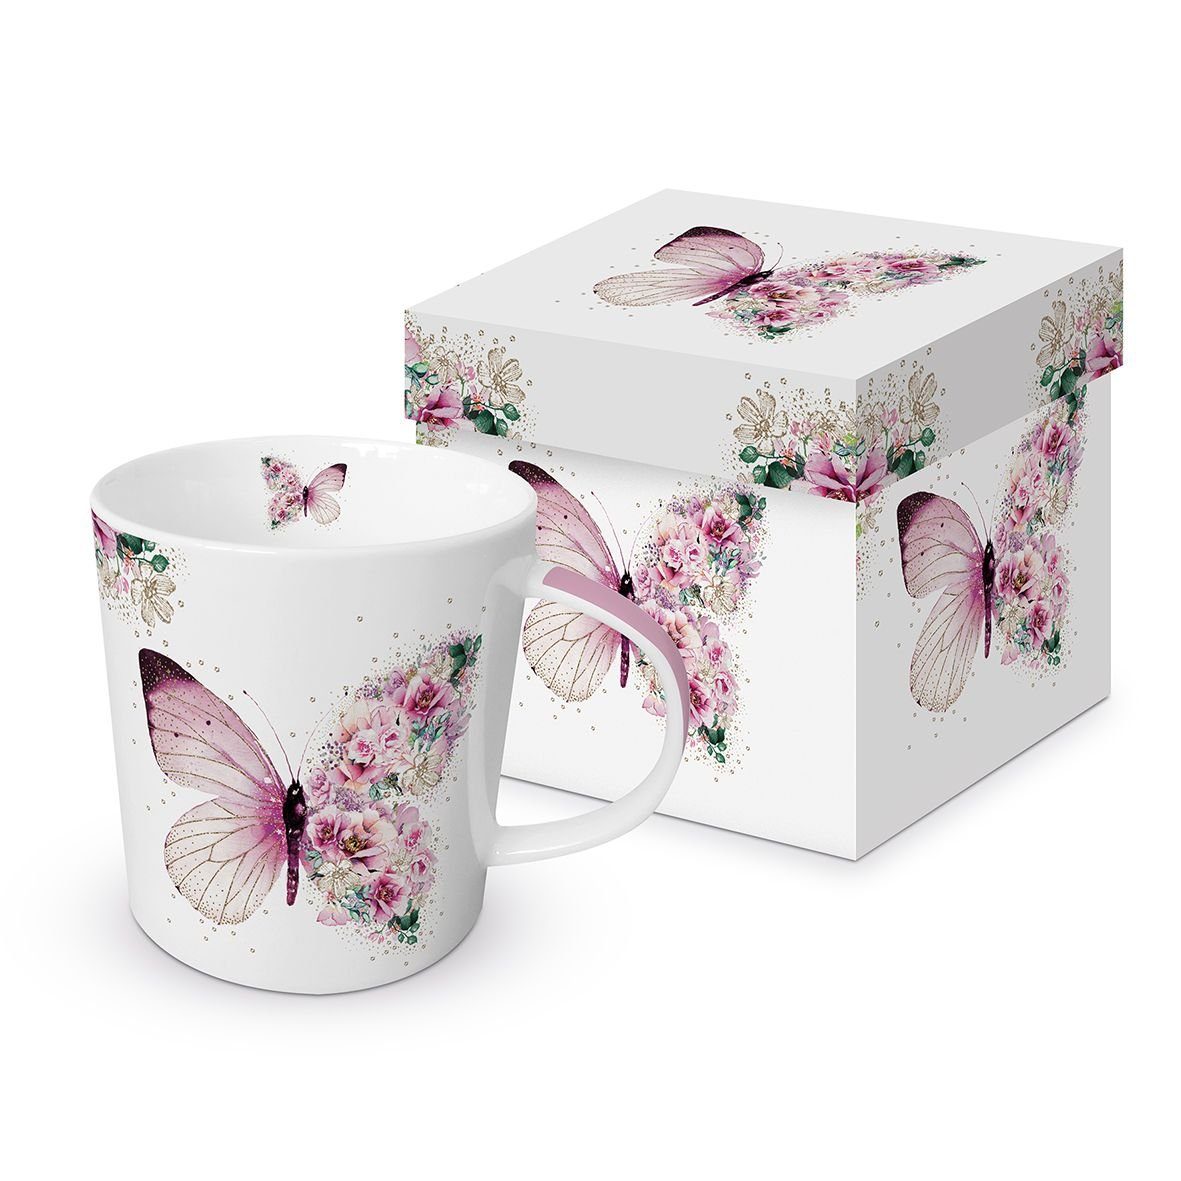 PPD Becher Porzellan Tasse - Becher mit Geschenkbox, Trend Mug Tee - Kaffee, Porzellan Kollektion Schmetterling, Frühling Vogel - Tiere / Sommer Blumen